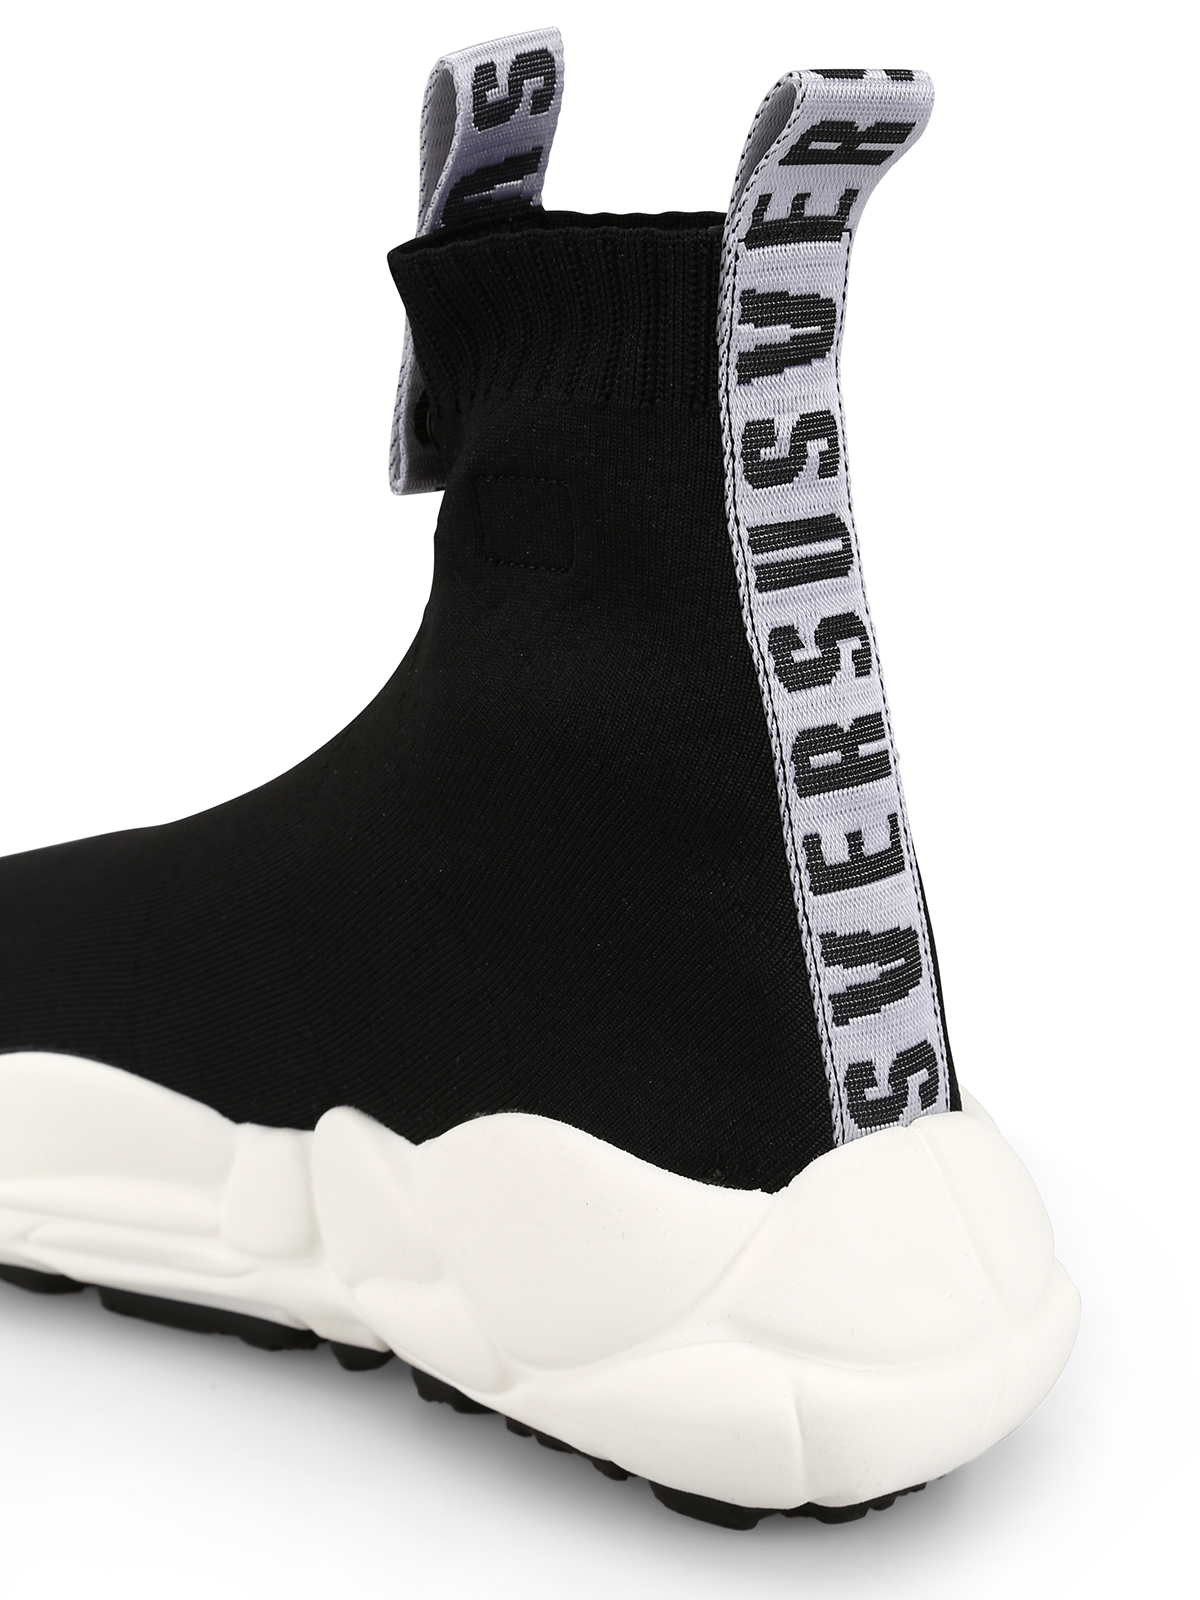 Versus Versace - Logo sock sneakers 